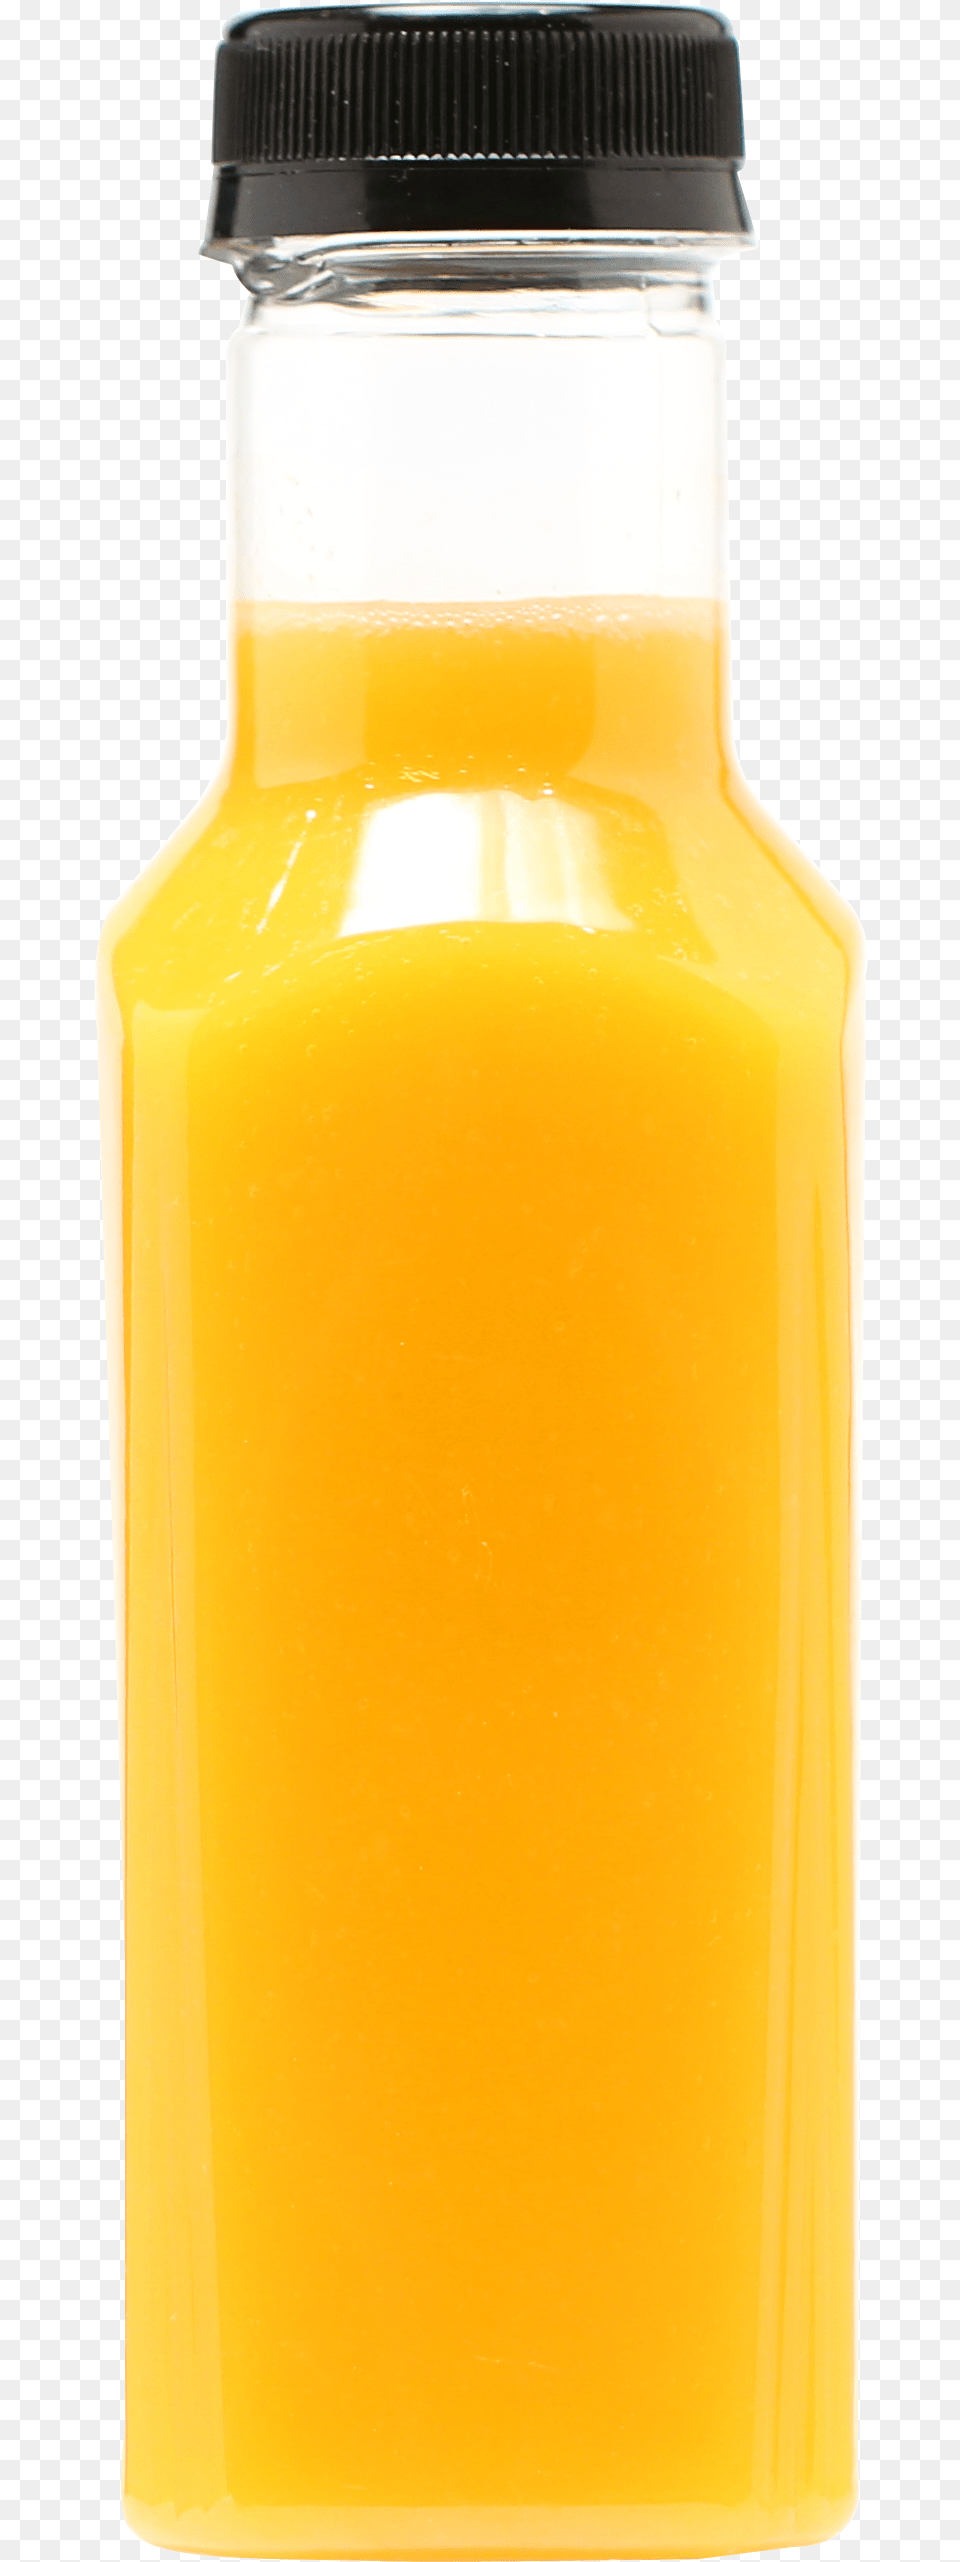 Orange Juice Orange Drink Glass Bottle Liquid Plastic, Beverage, Orange Juice, Food, Ketchup Free Png Download